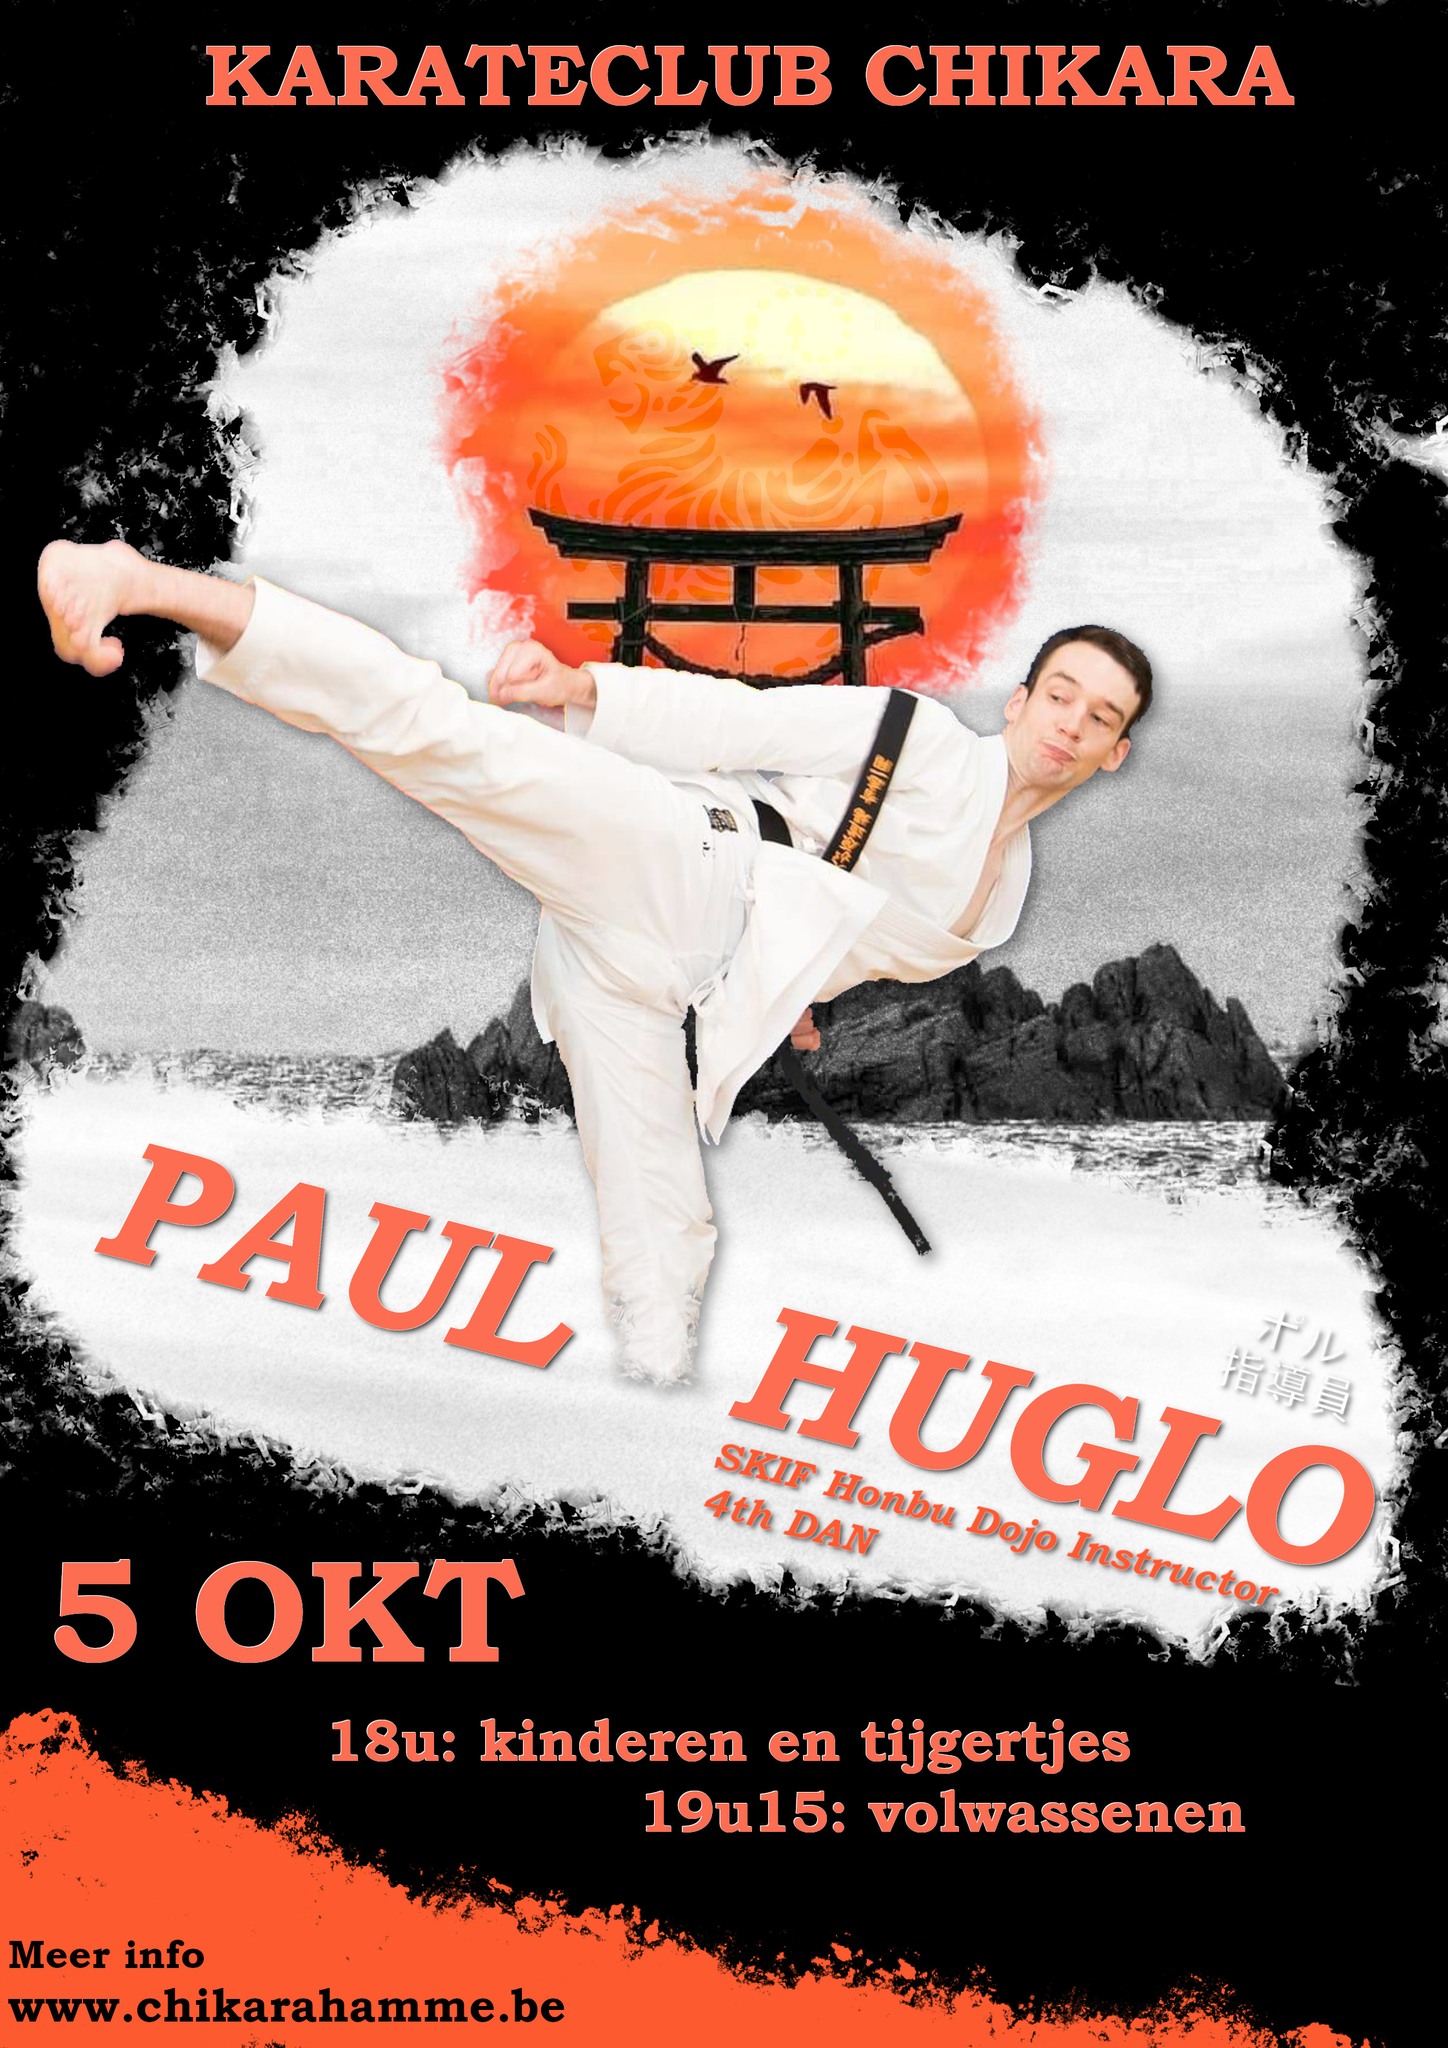 SKIF Belgium - Sensei Paul Huglo